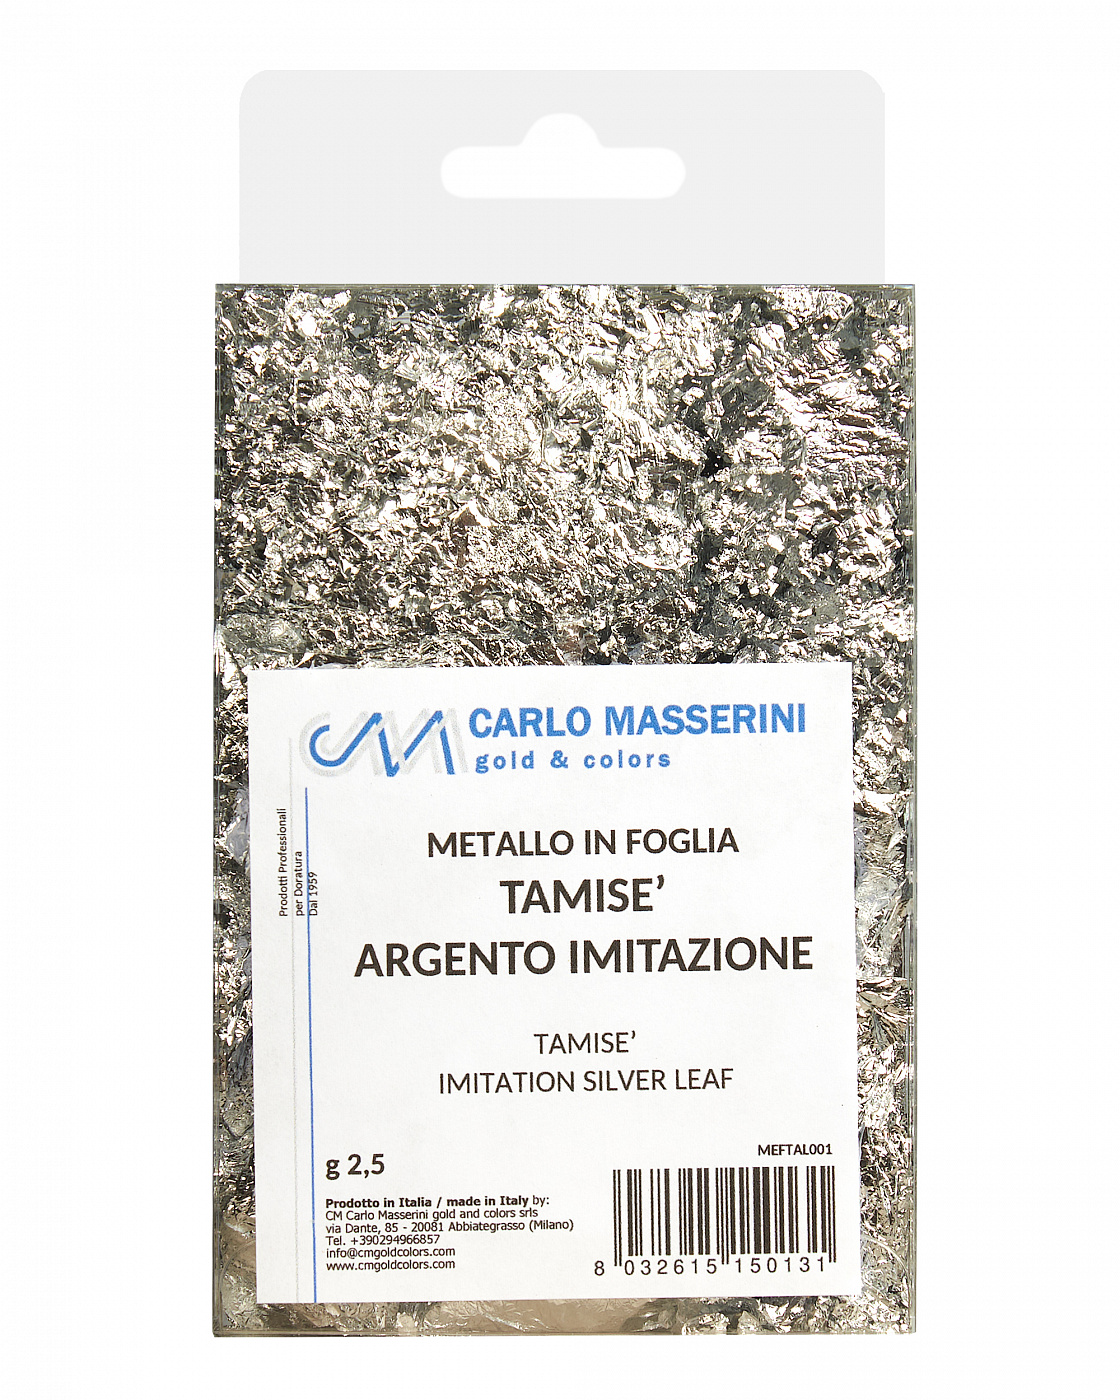 Поталь Masserini имитация серебра крошка крошка металлическая ferrario 03 3 5 г имитация серебра меди